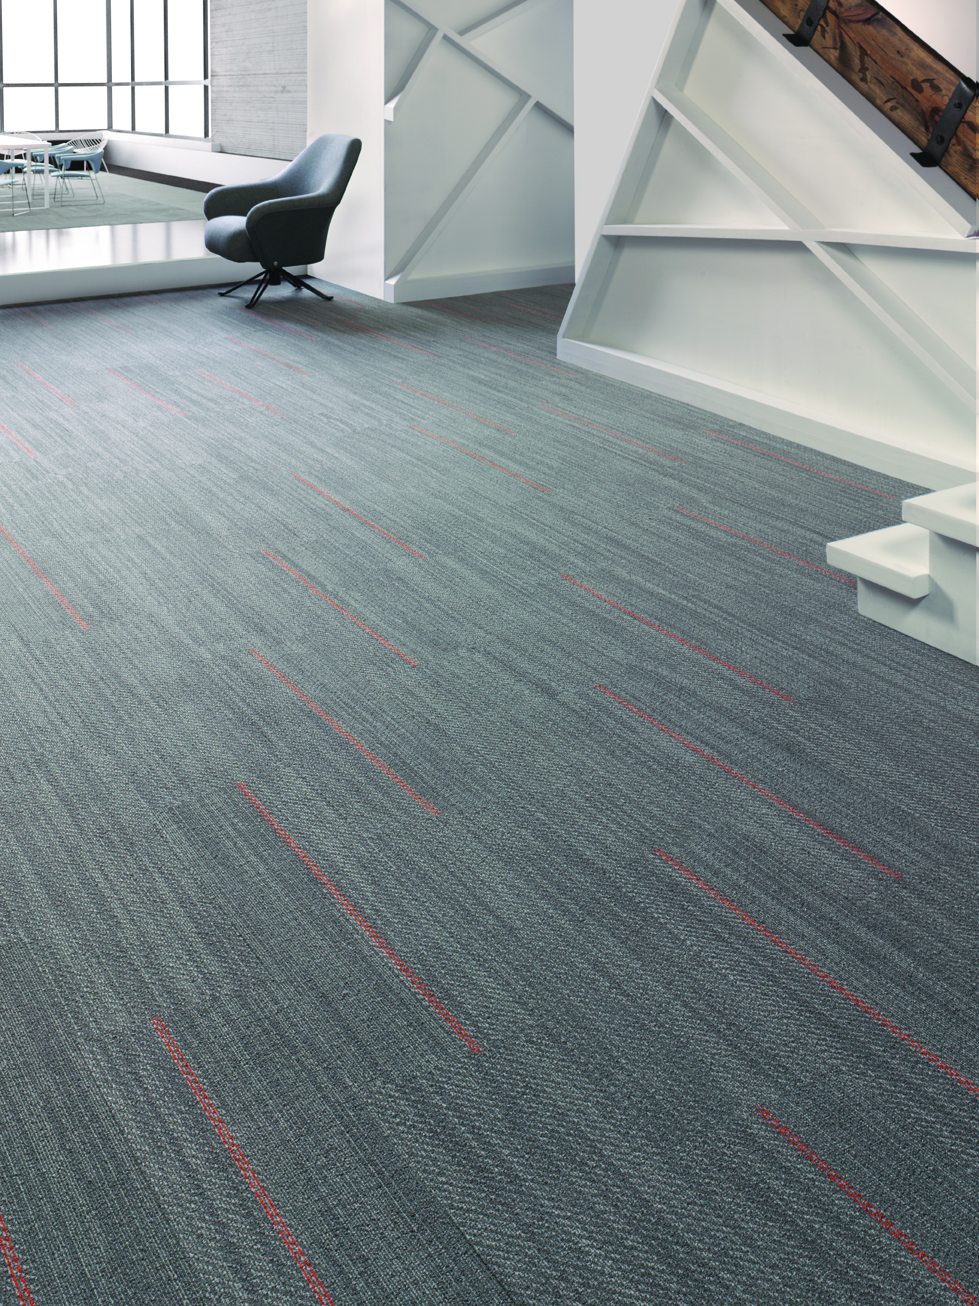 Premium Carpet Tiles Tile Design Ideas